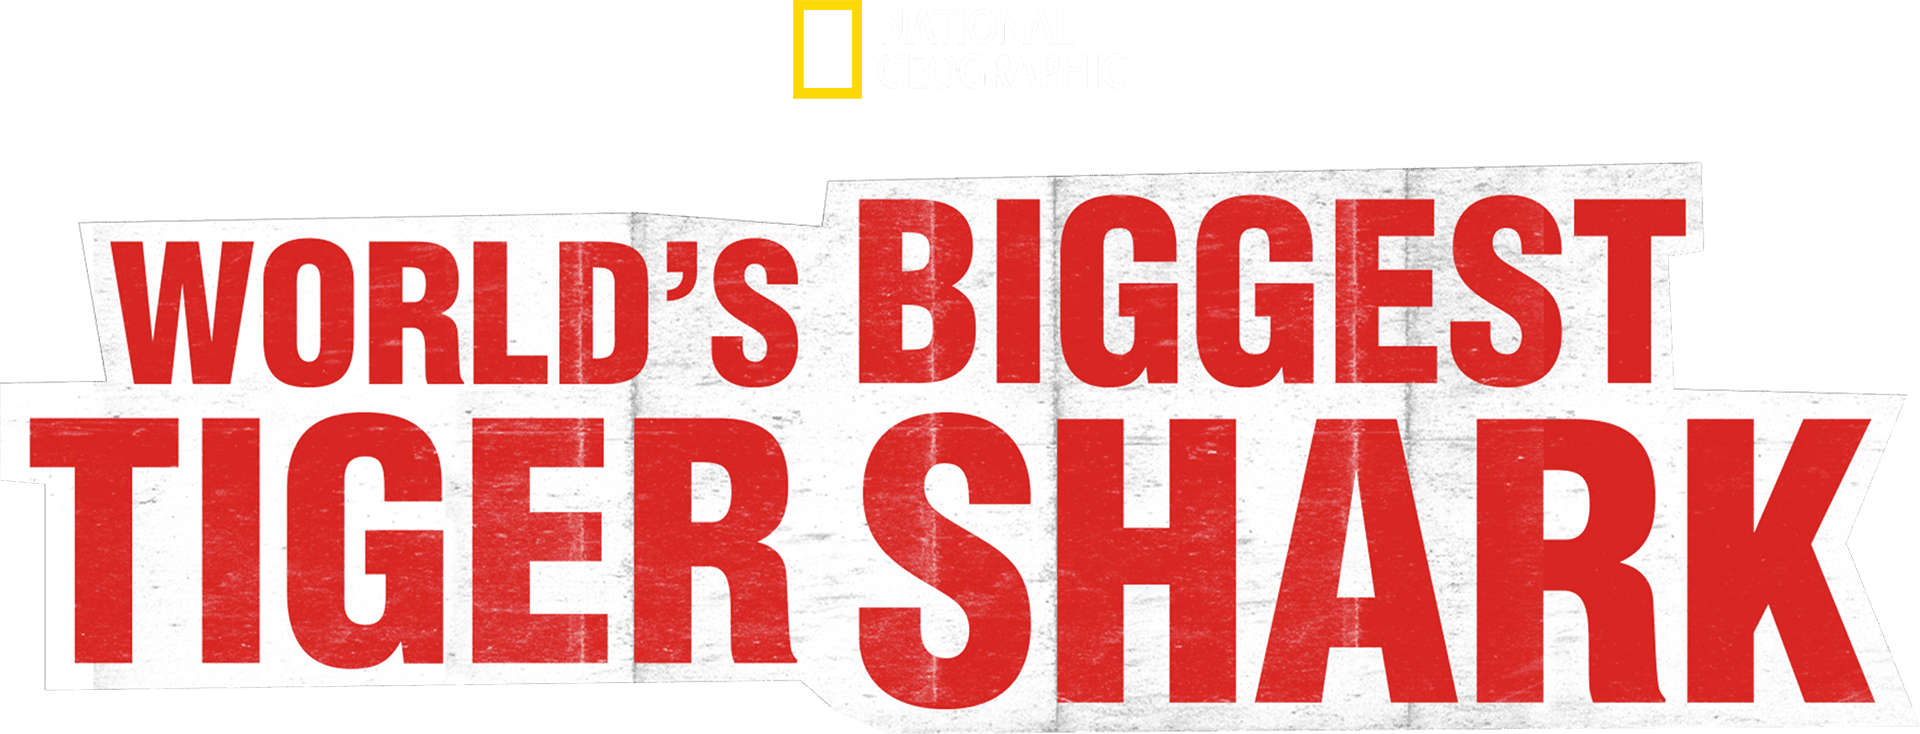 World's Biggest Tiger Shark logo